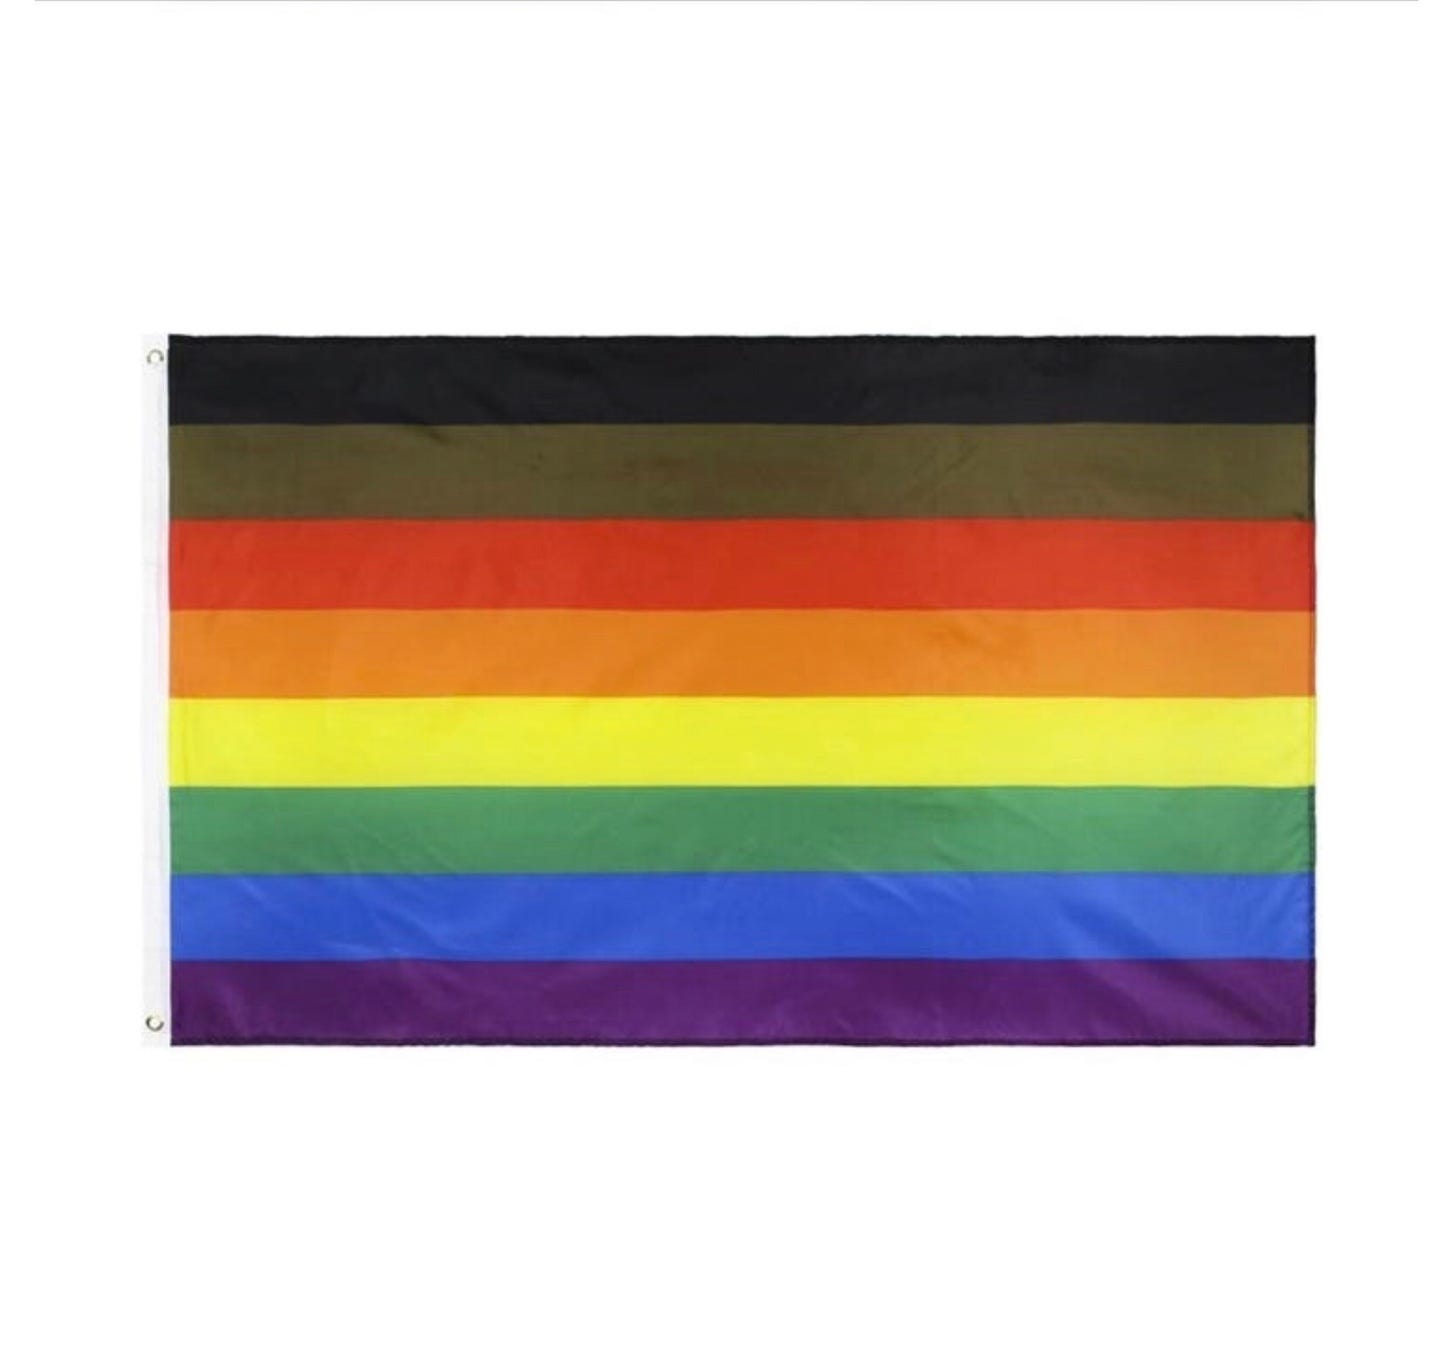 Philadelphia Regenbogenflagge 150 x 90cm